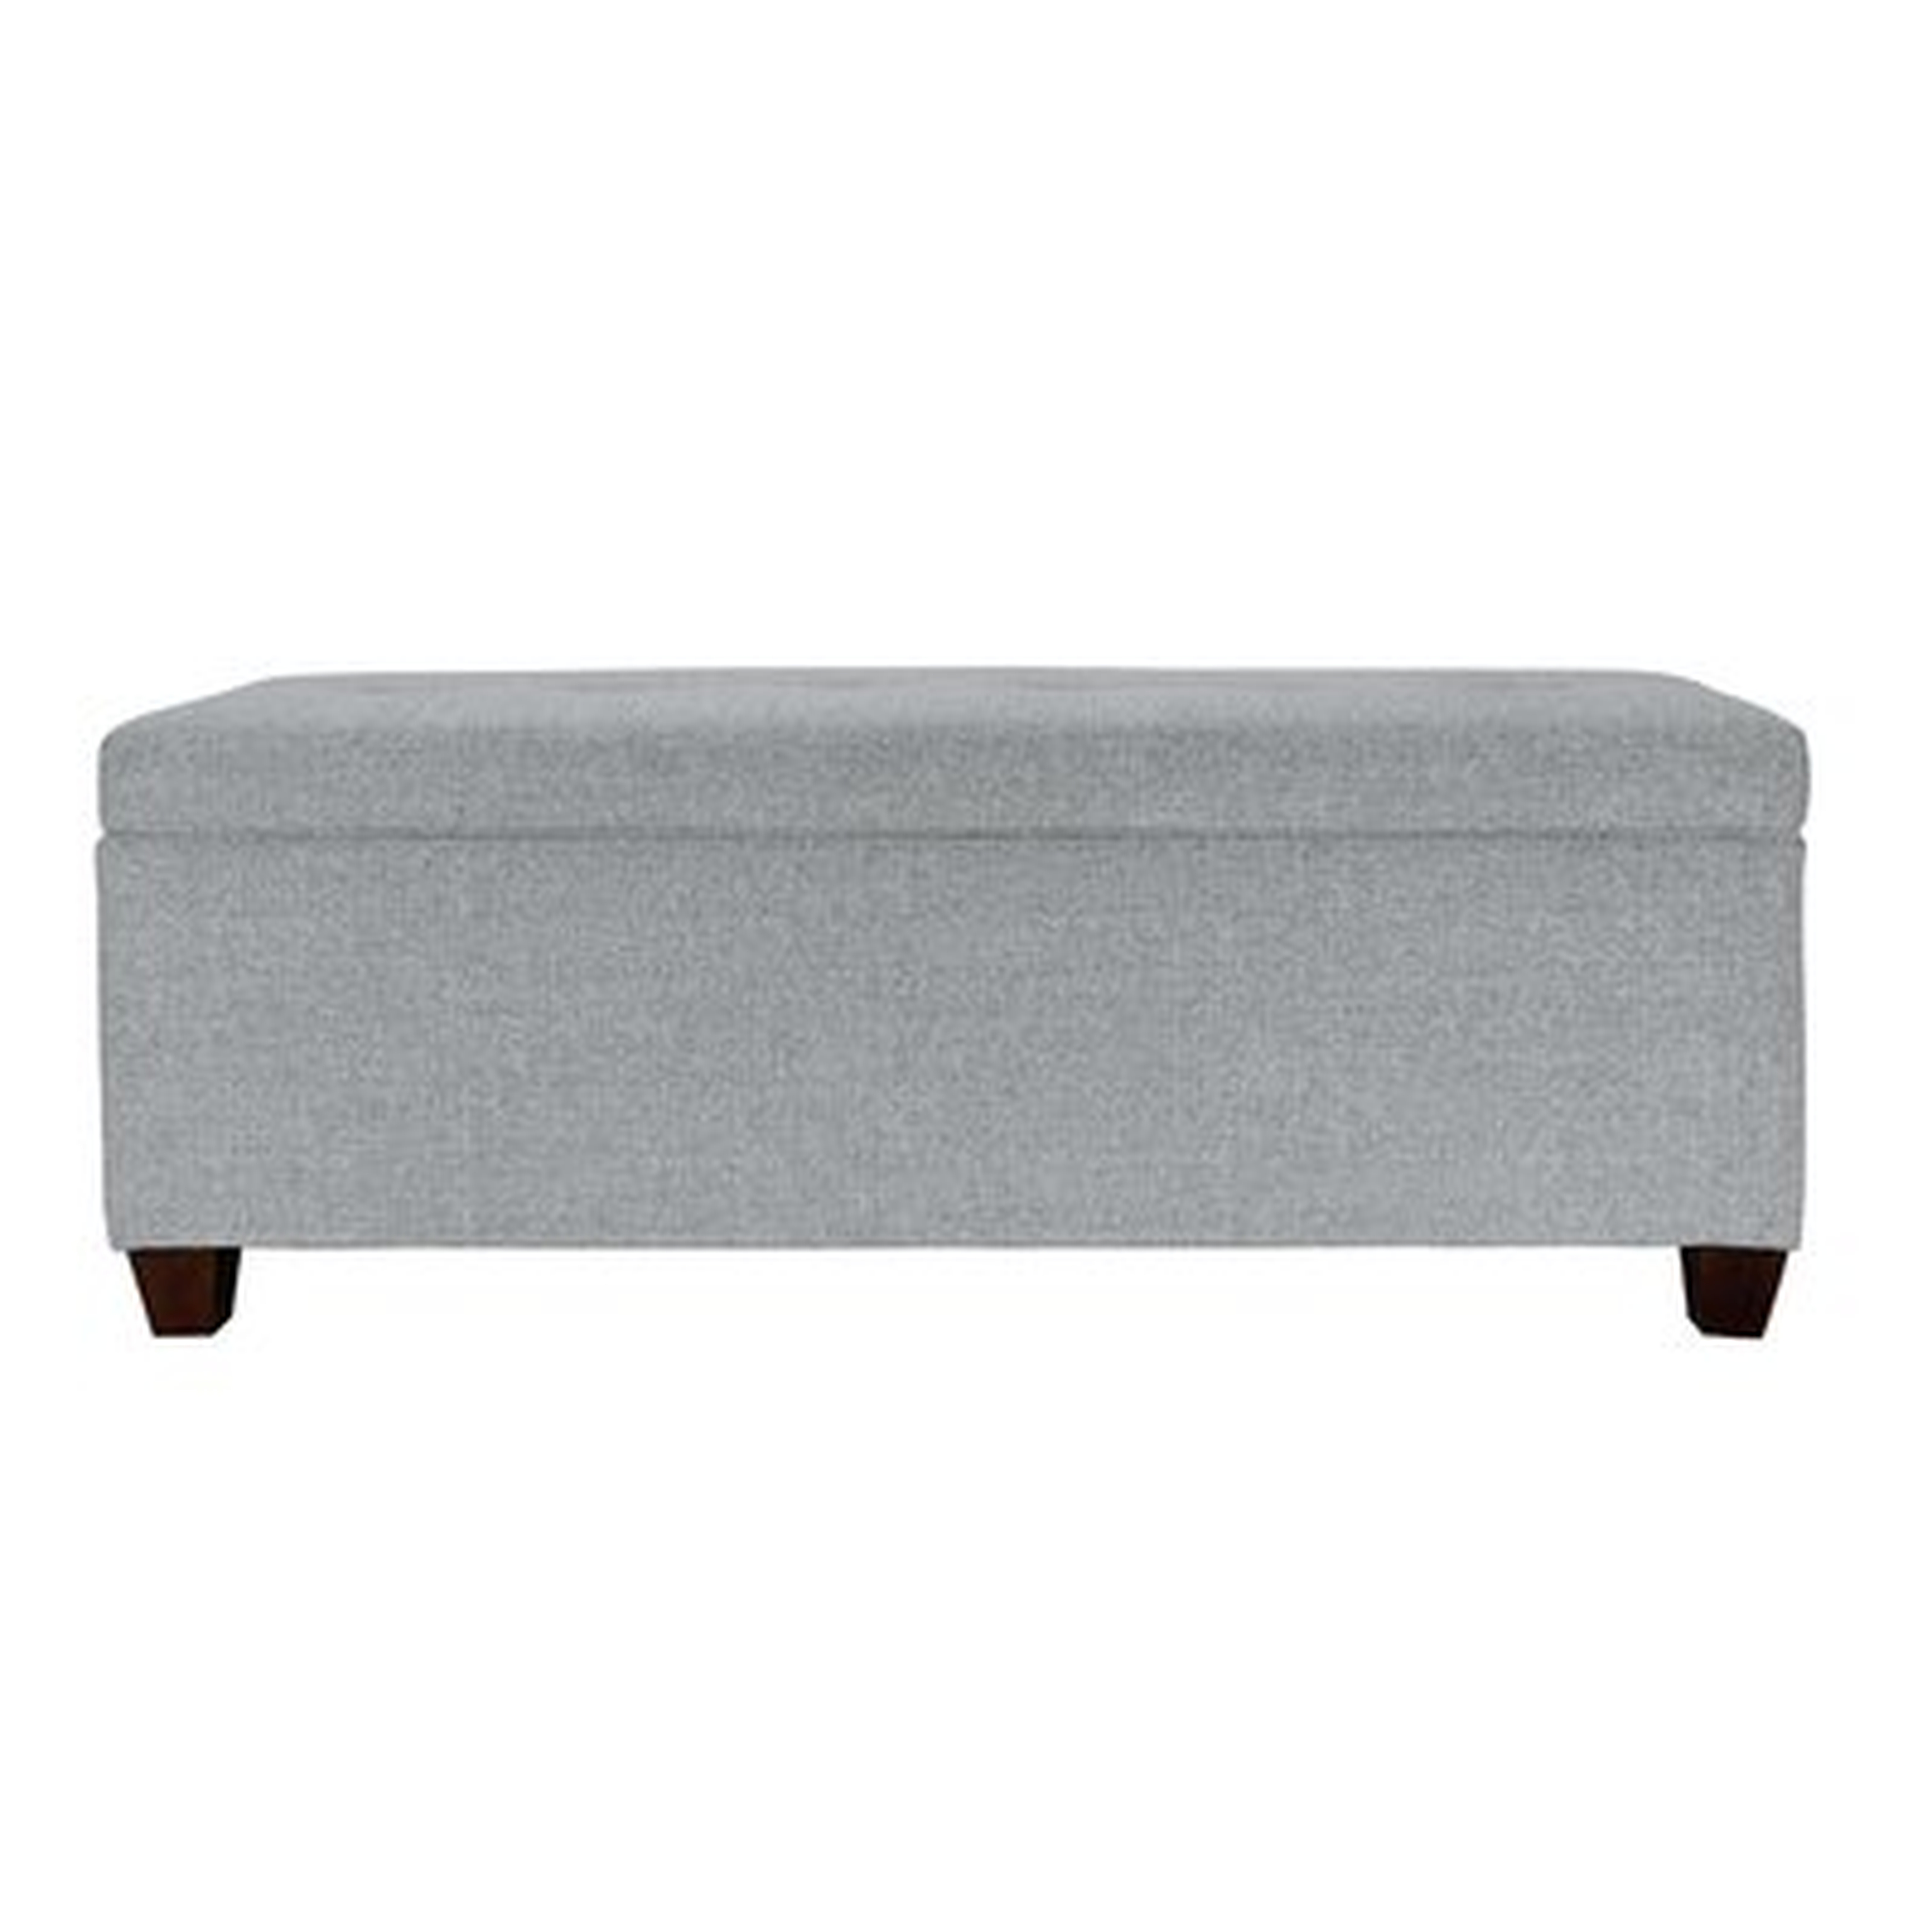 Lalonde Upholstered Storage Bench- no nailhead - Wayfair